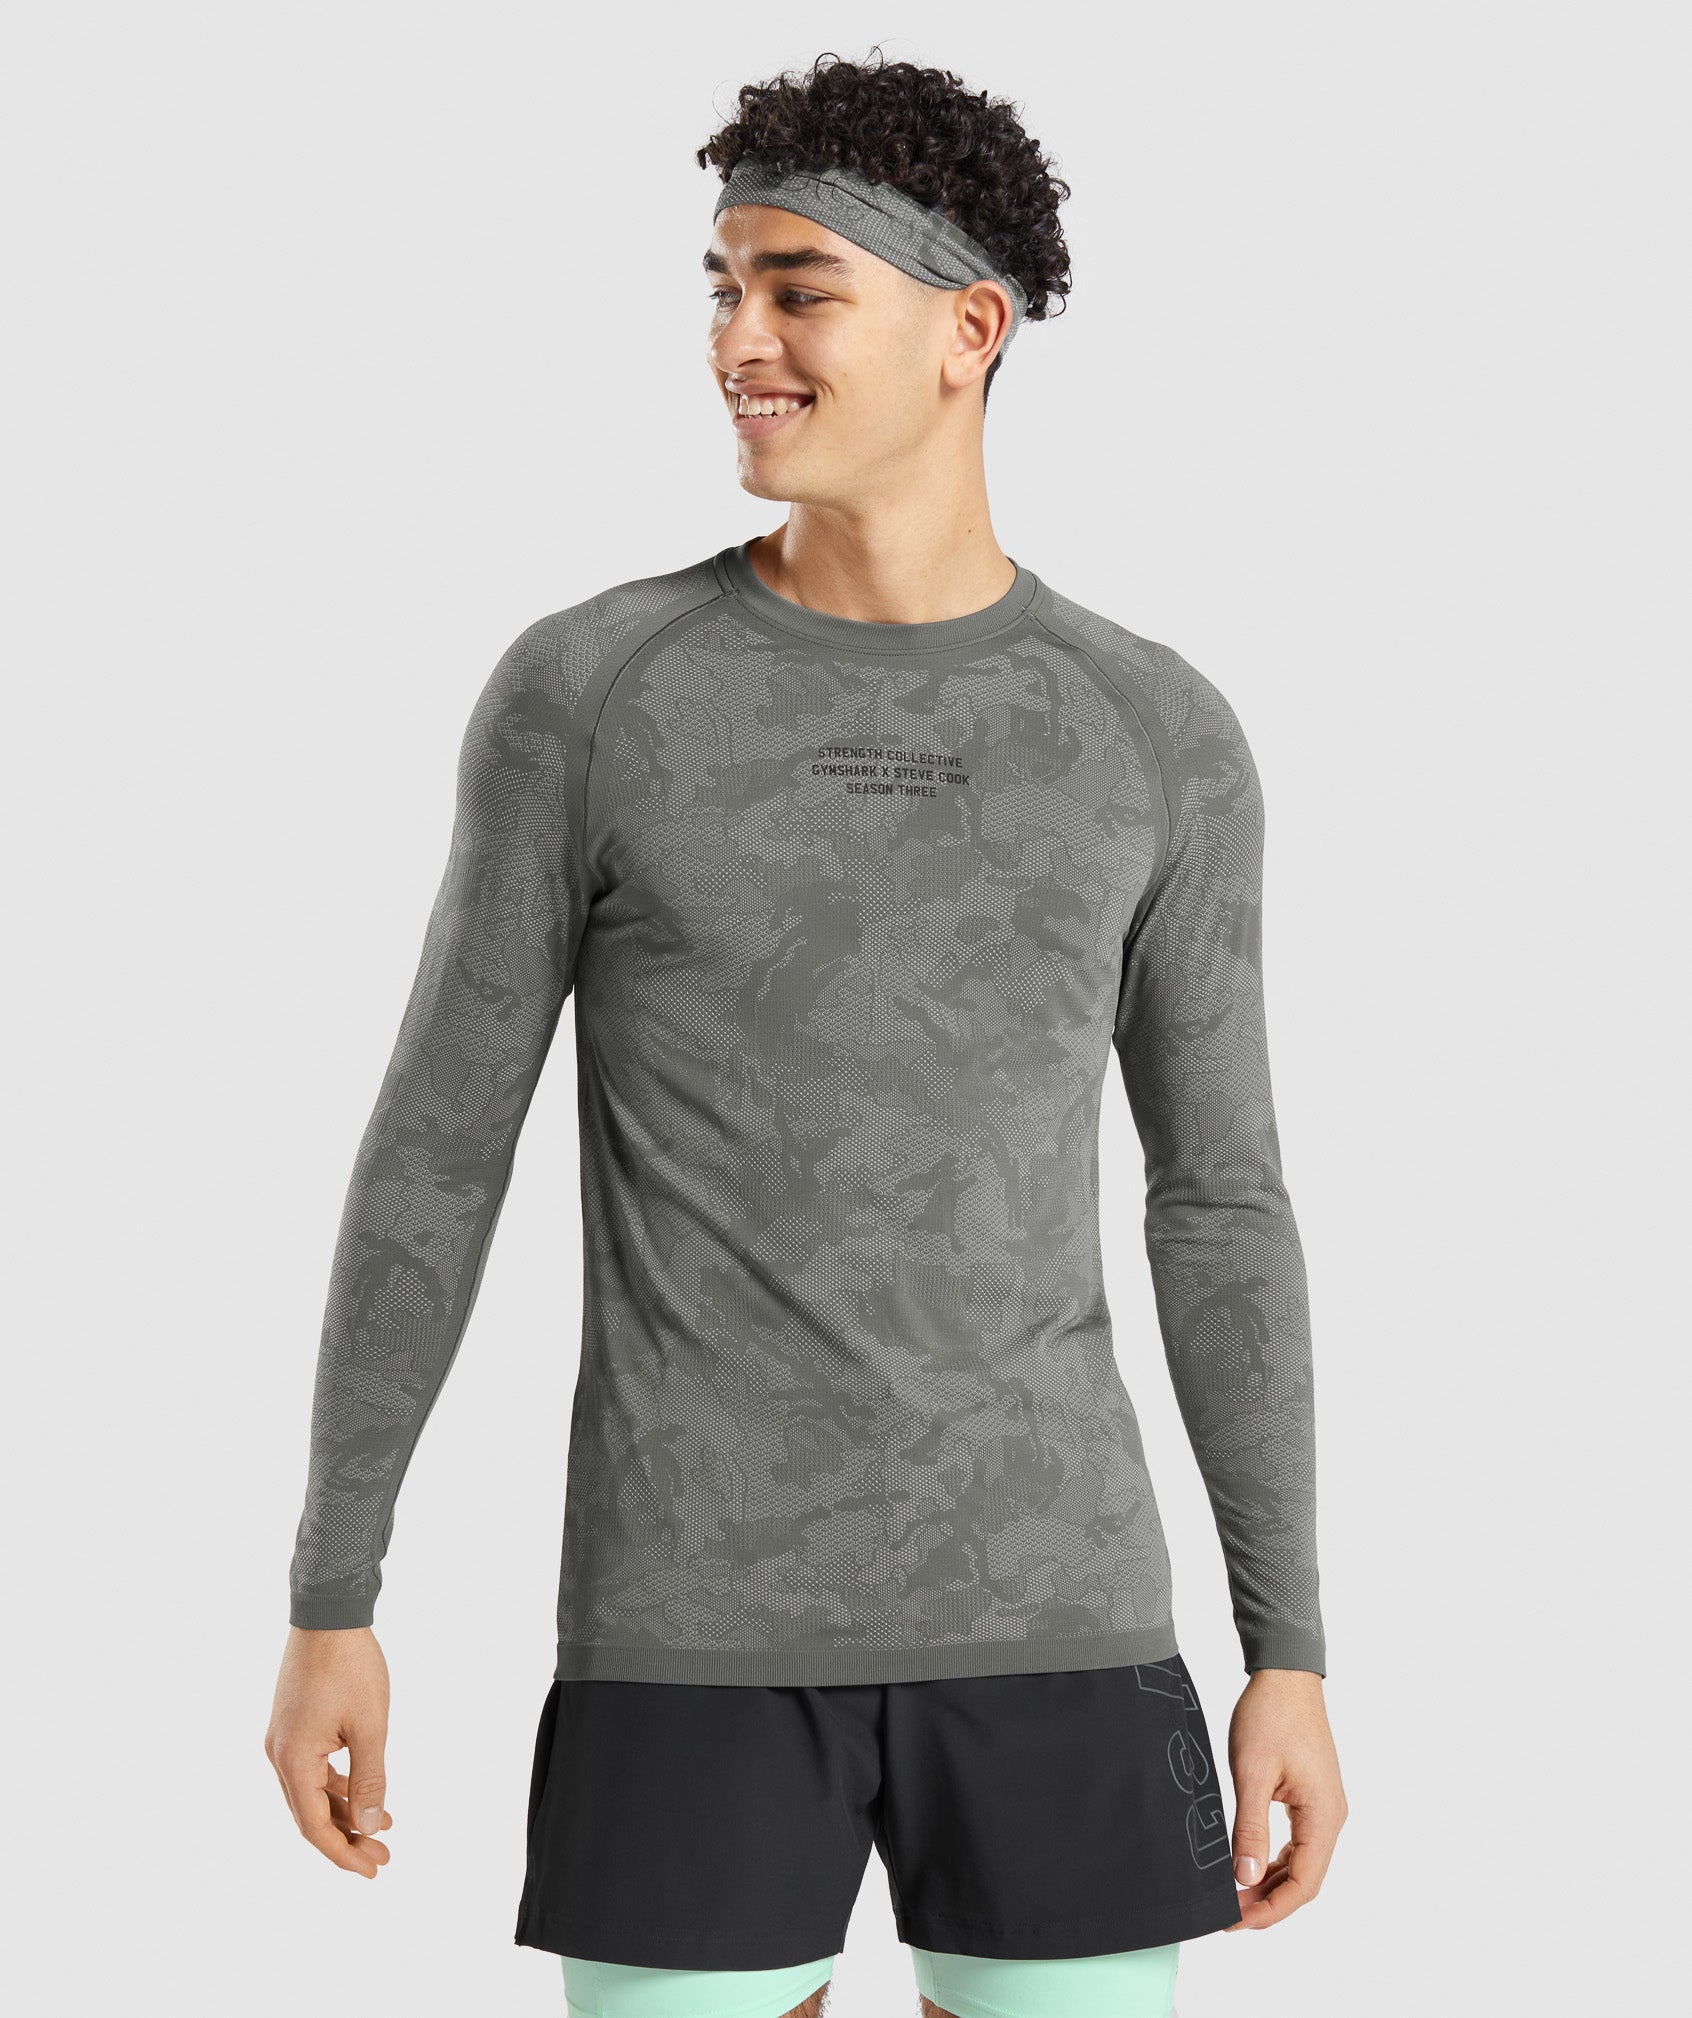 Gymshark//Steve Cook Long Sleeve Seamless T-Shirt in Charcoal Grey/Smokey Grey - view 2